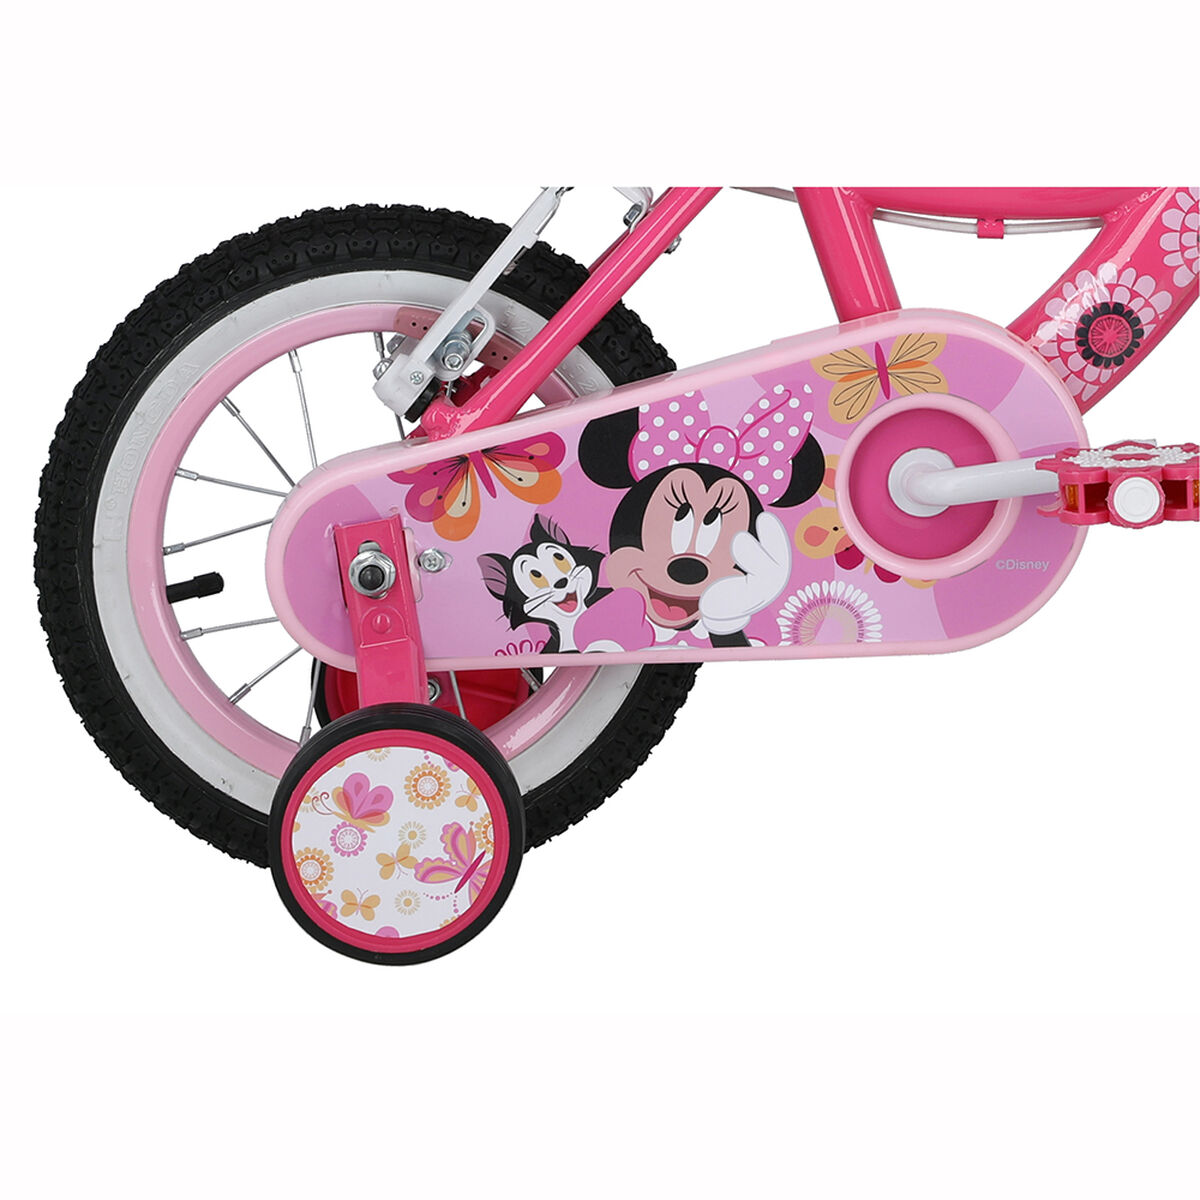 Bicicleta Niña Disney Minnie Aro 12 Rosado